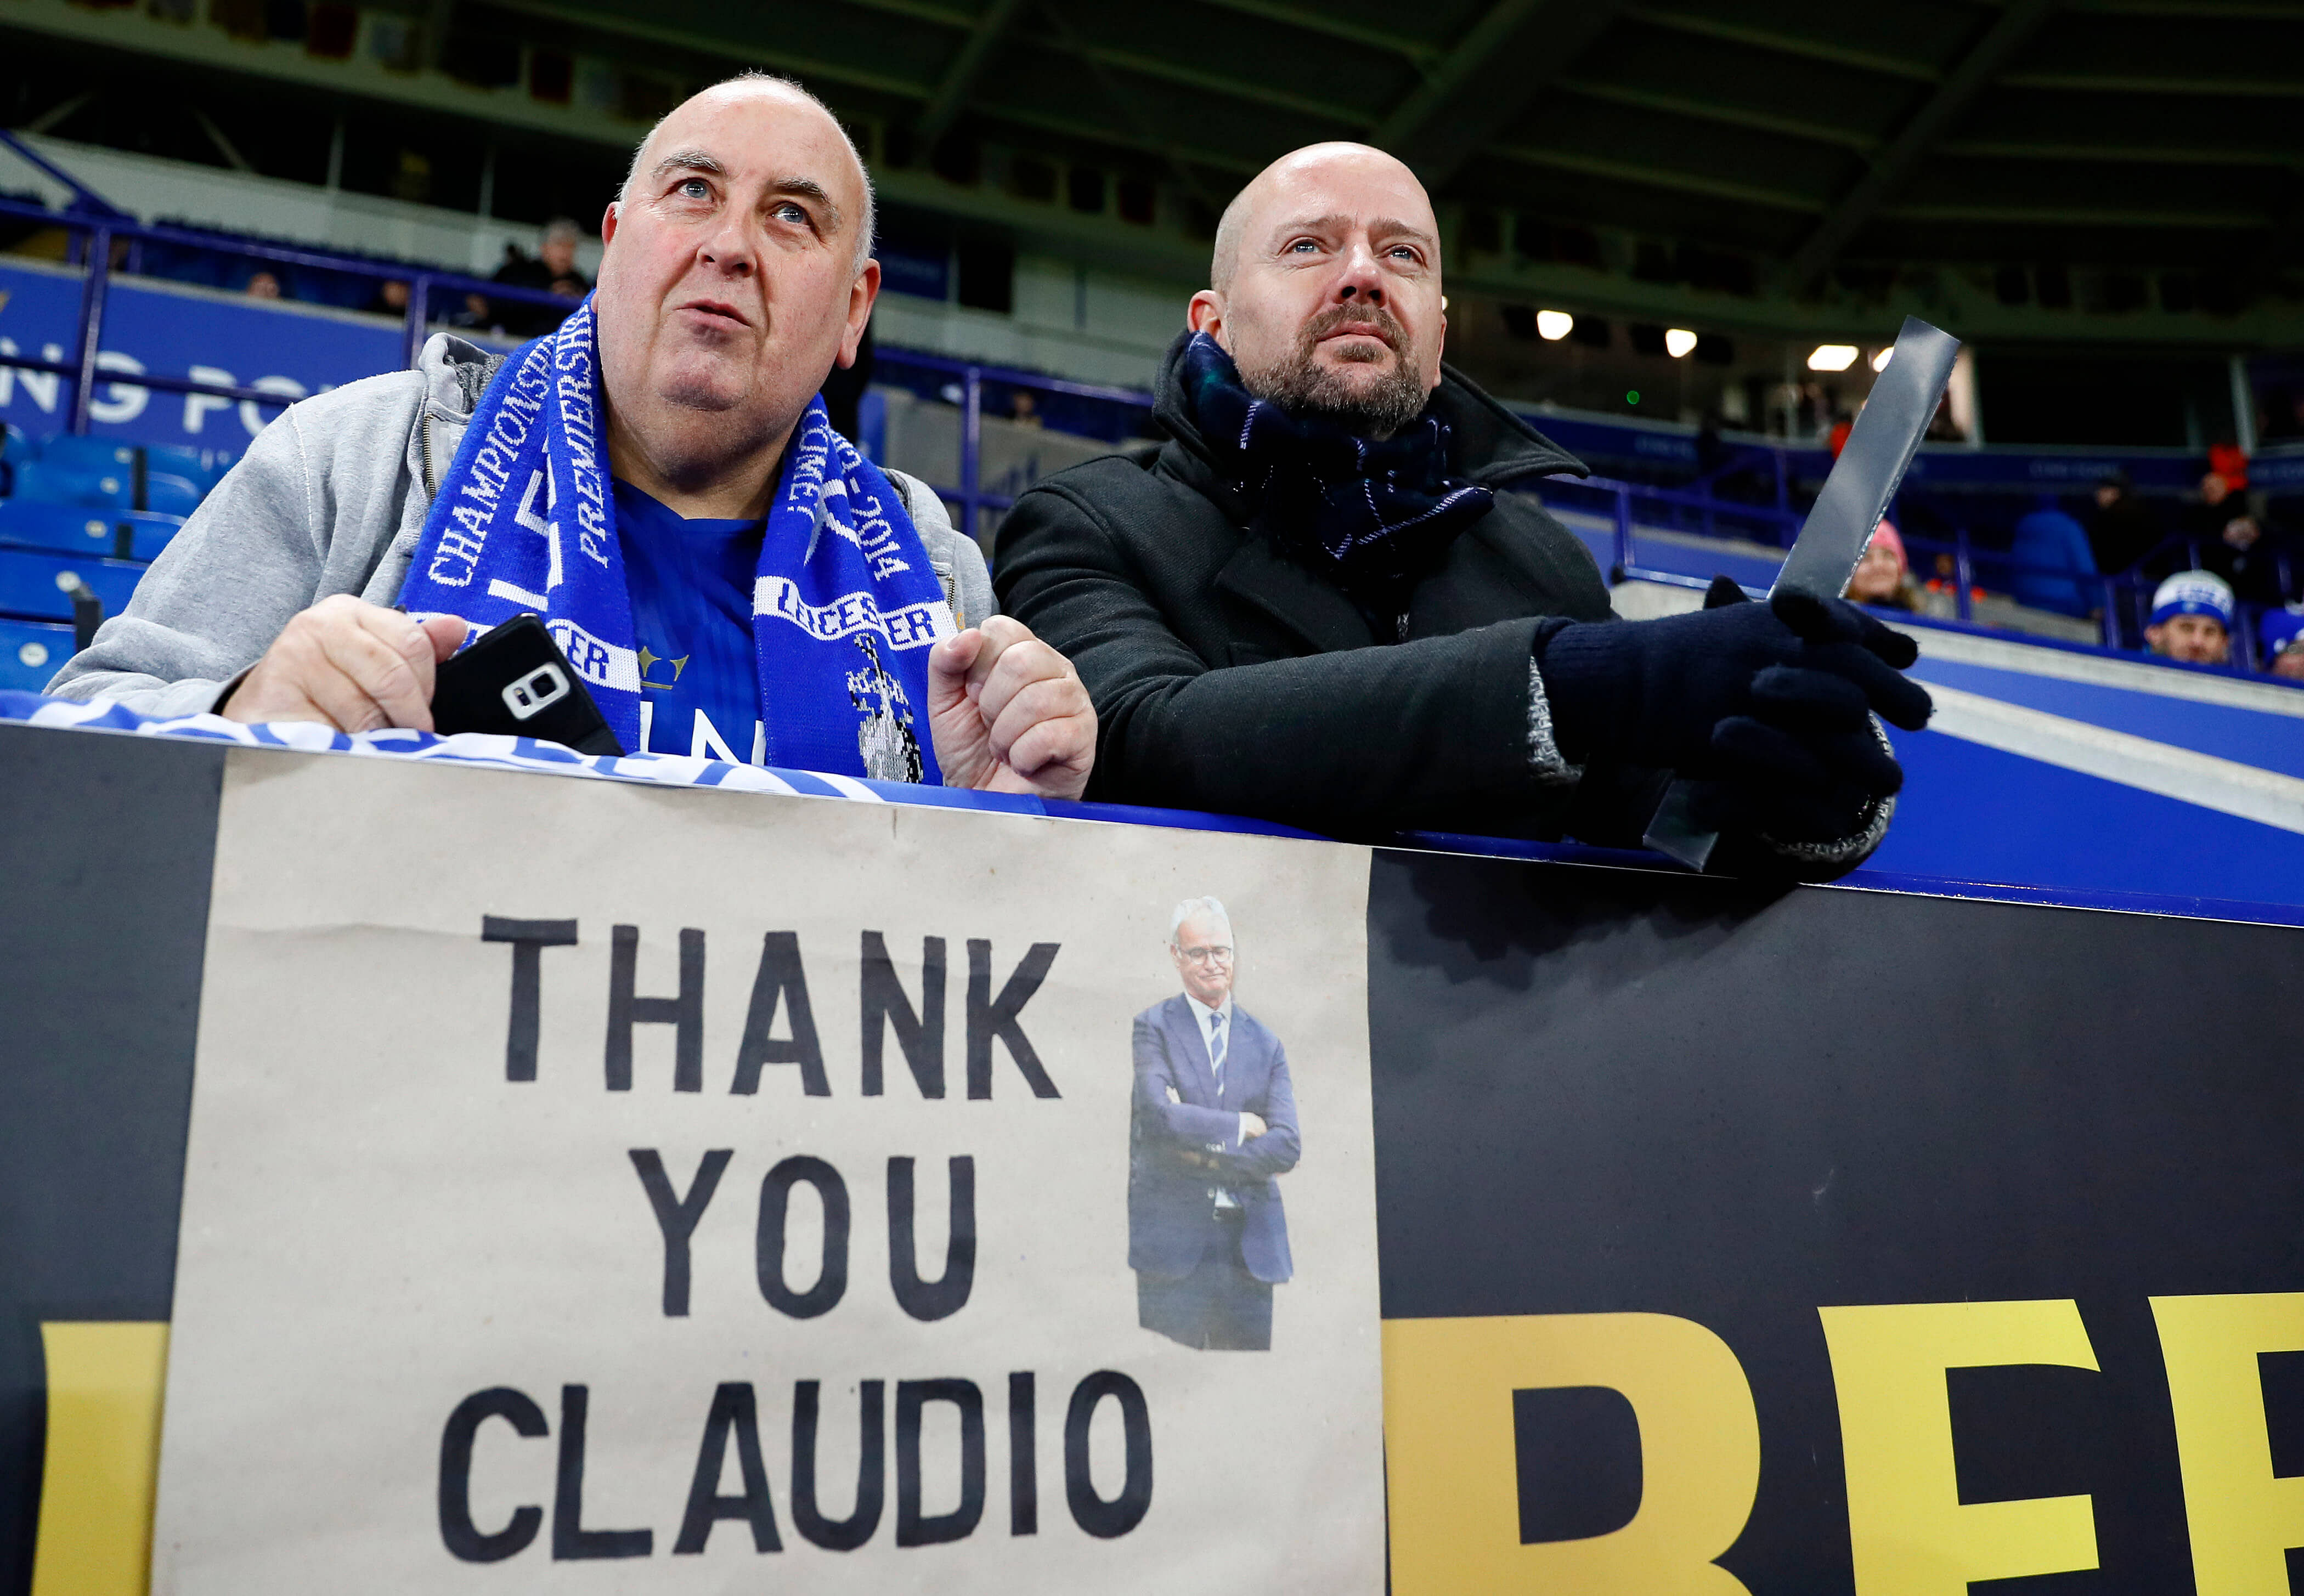 Football: Leicester fans honour sacked Ranieri | The Straits Times